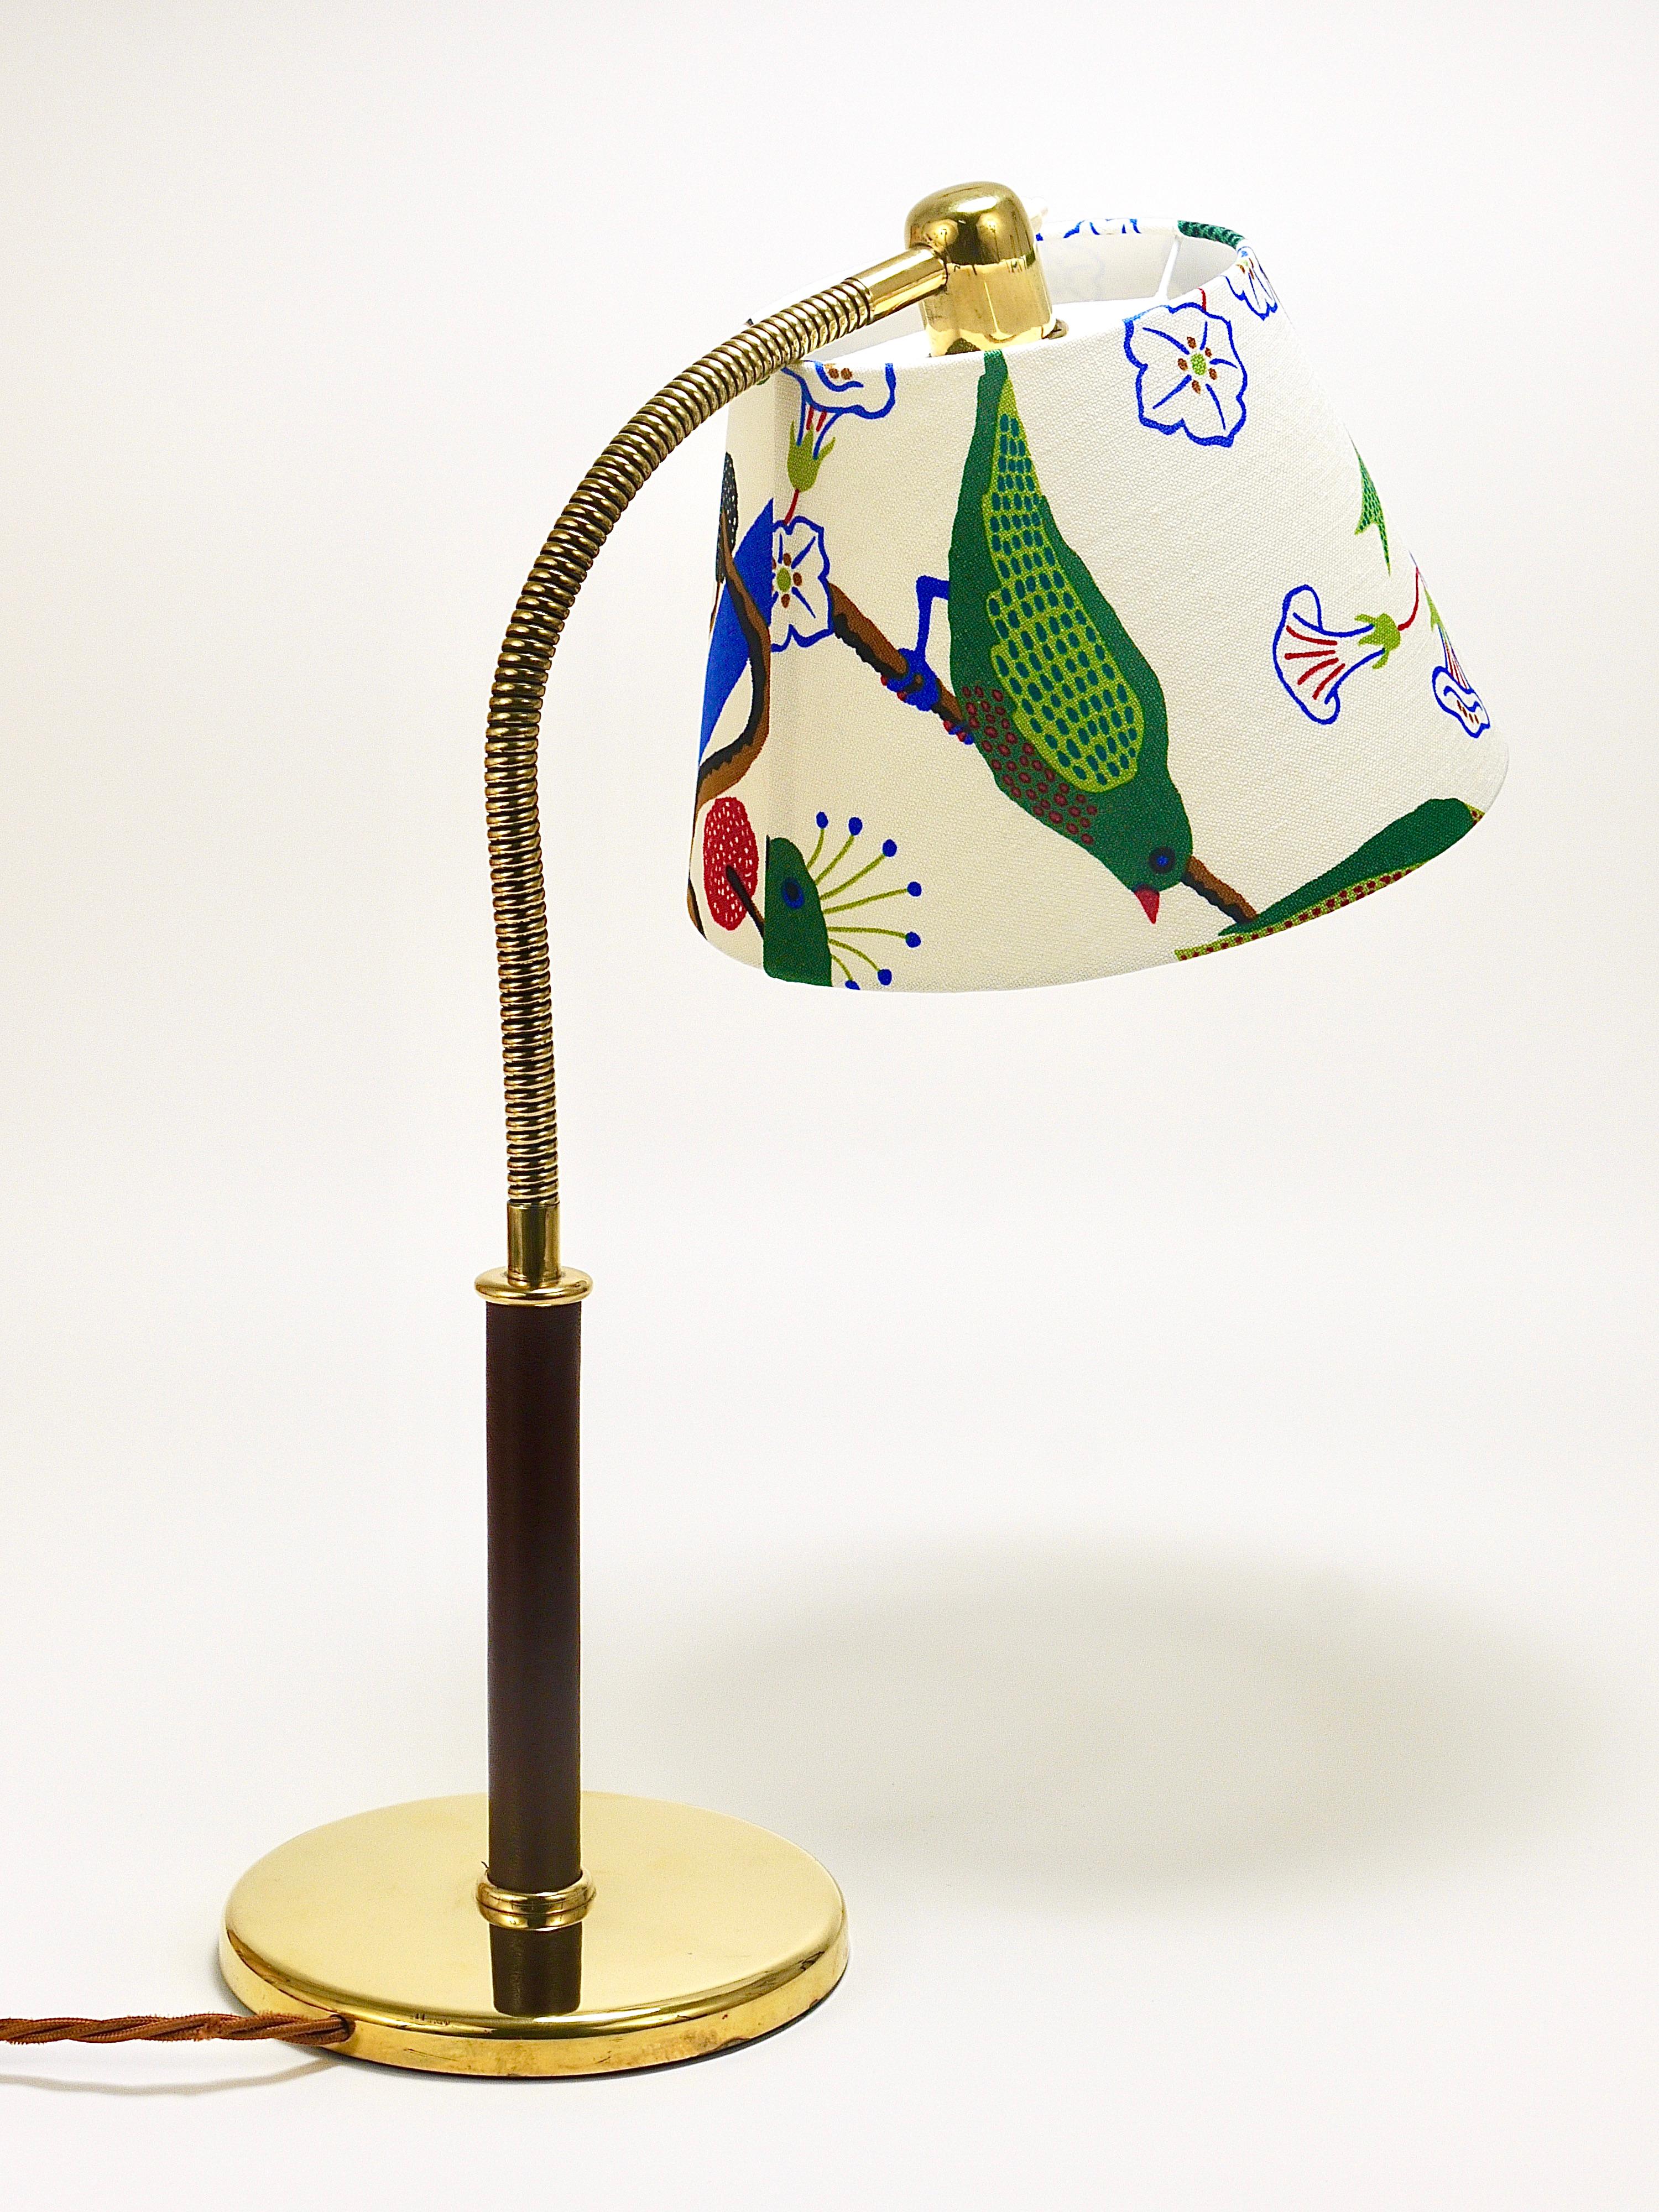 Josef Frank J.T. Kalmar Table Lamp Tisch-Überall, Brass & Leather, Austria, 1930 For Sale 7